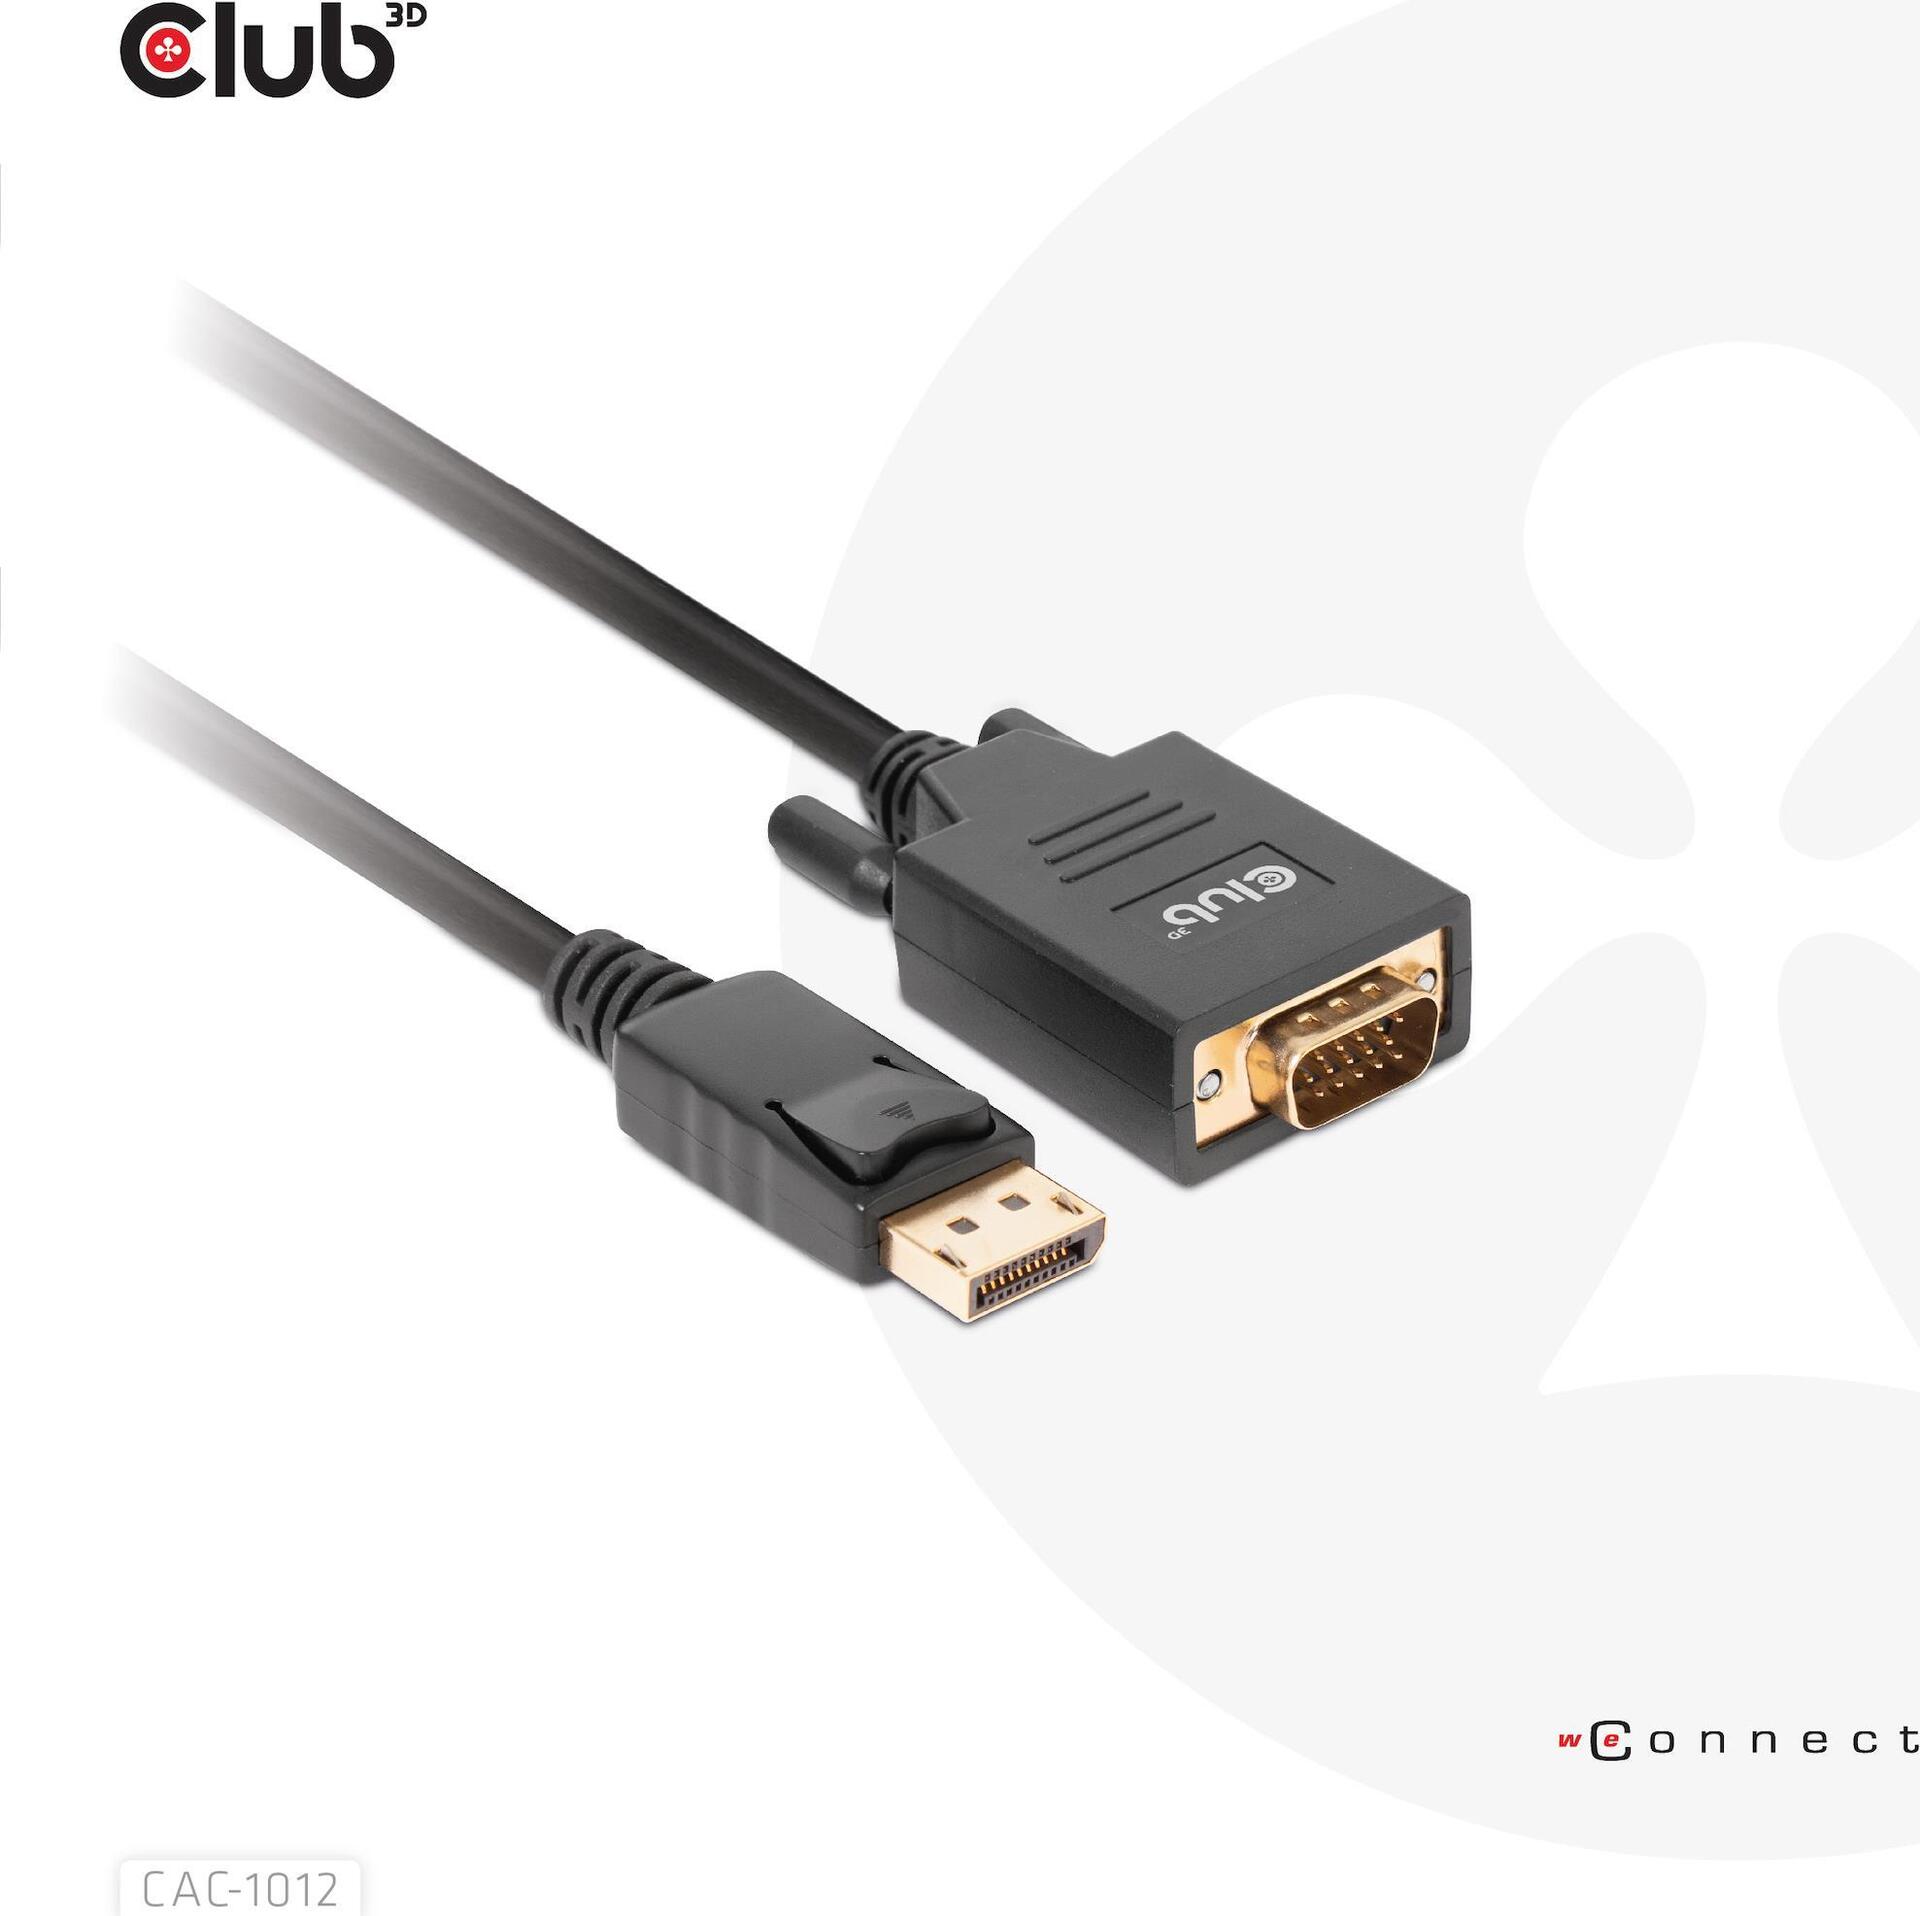 Club 3D Adapterkabel (CAC-1012)